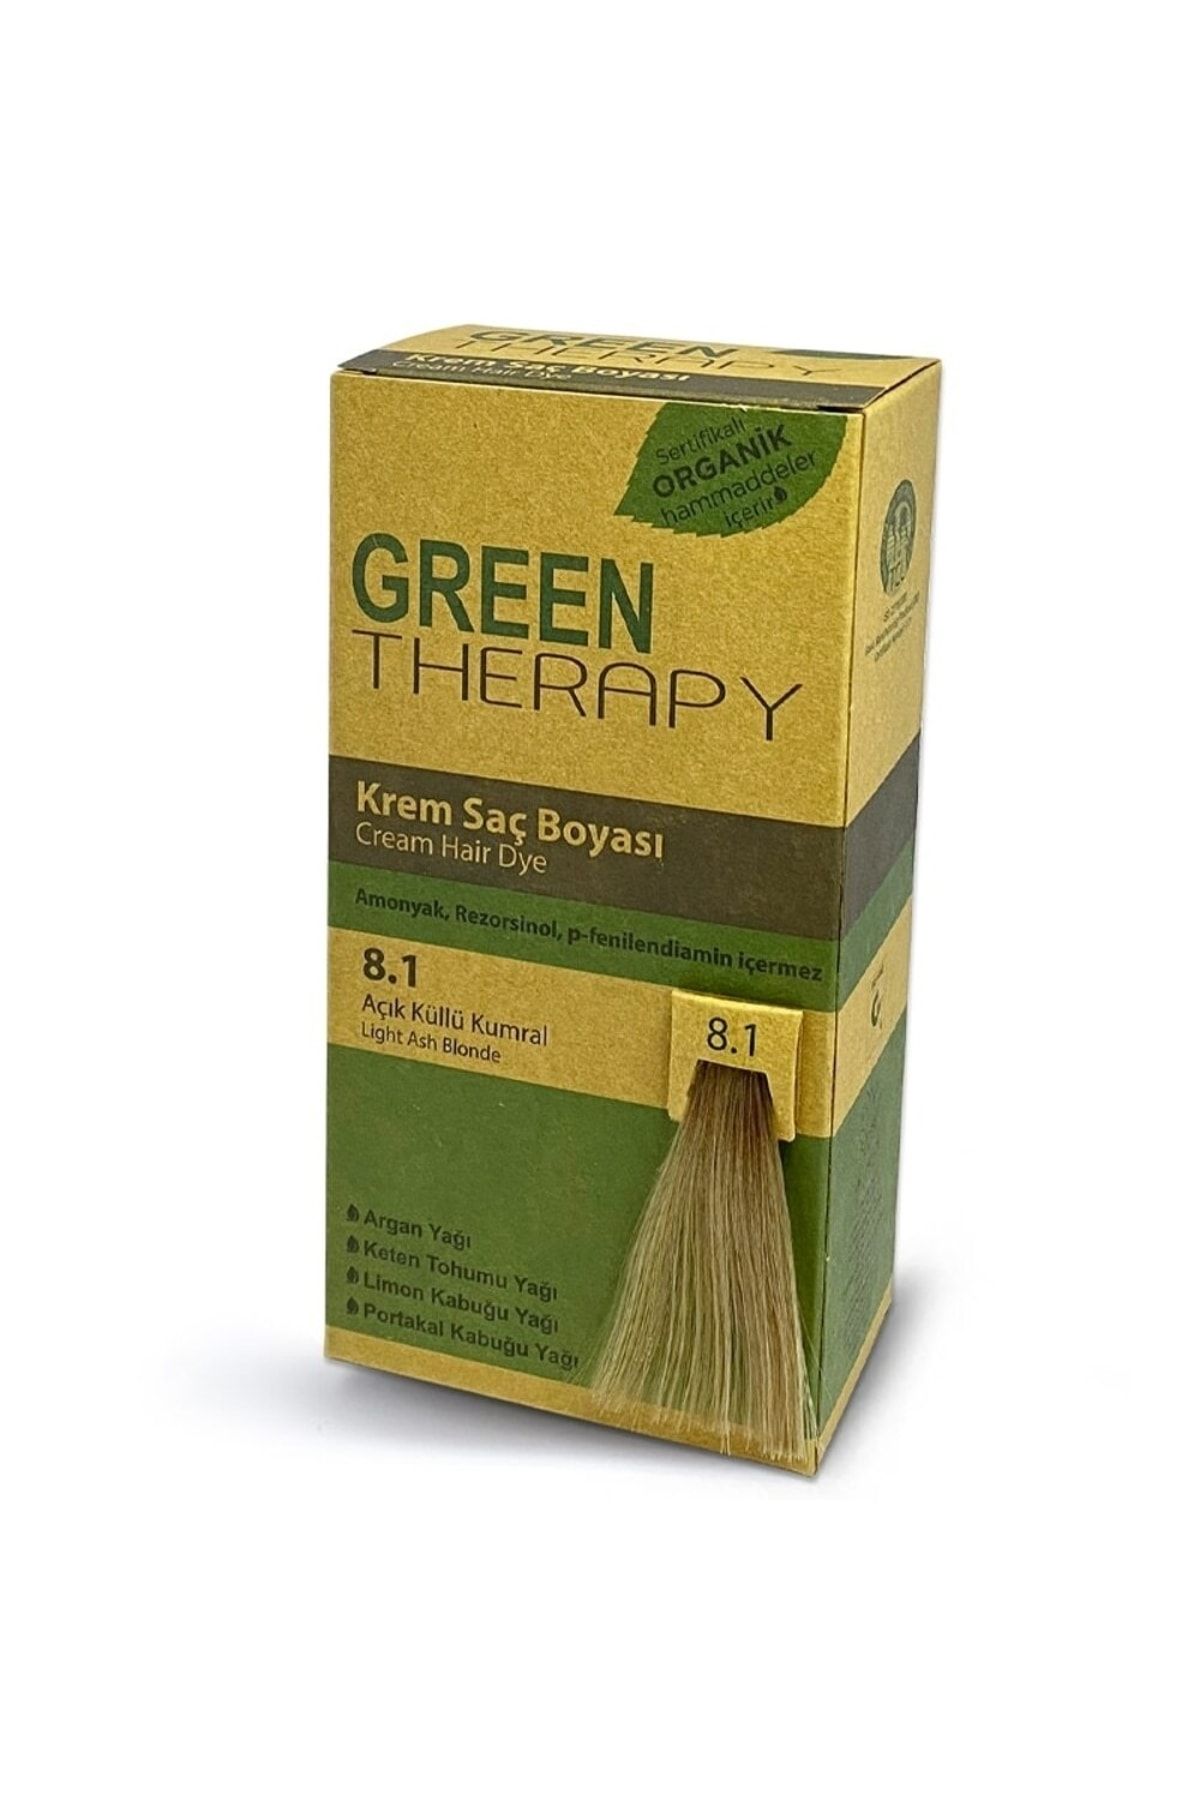 Green Therapy Krem Saç Boyası 6,1 Koyu Küllü Kumral